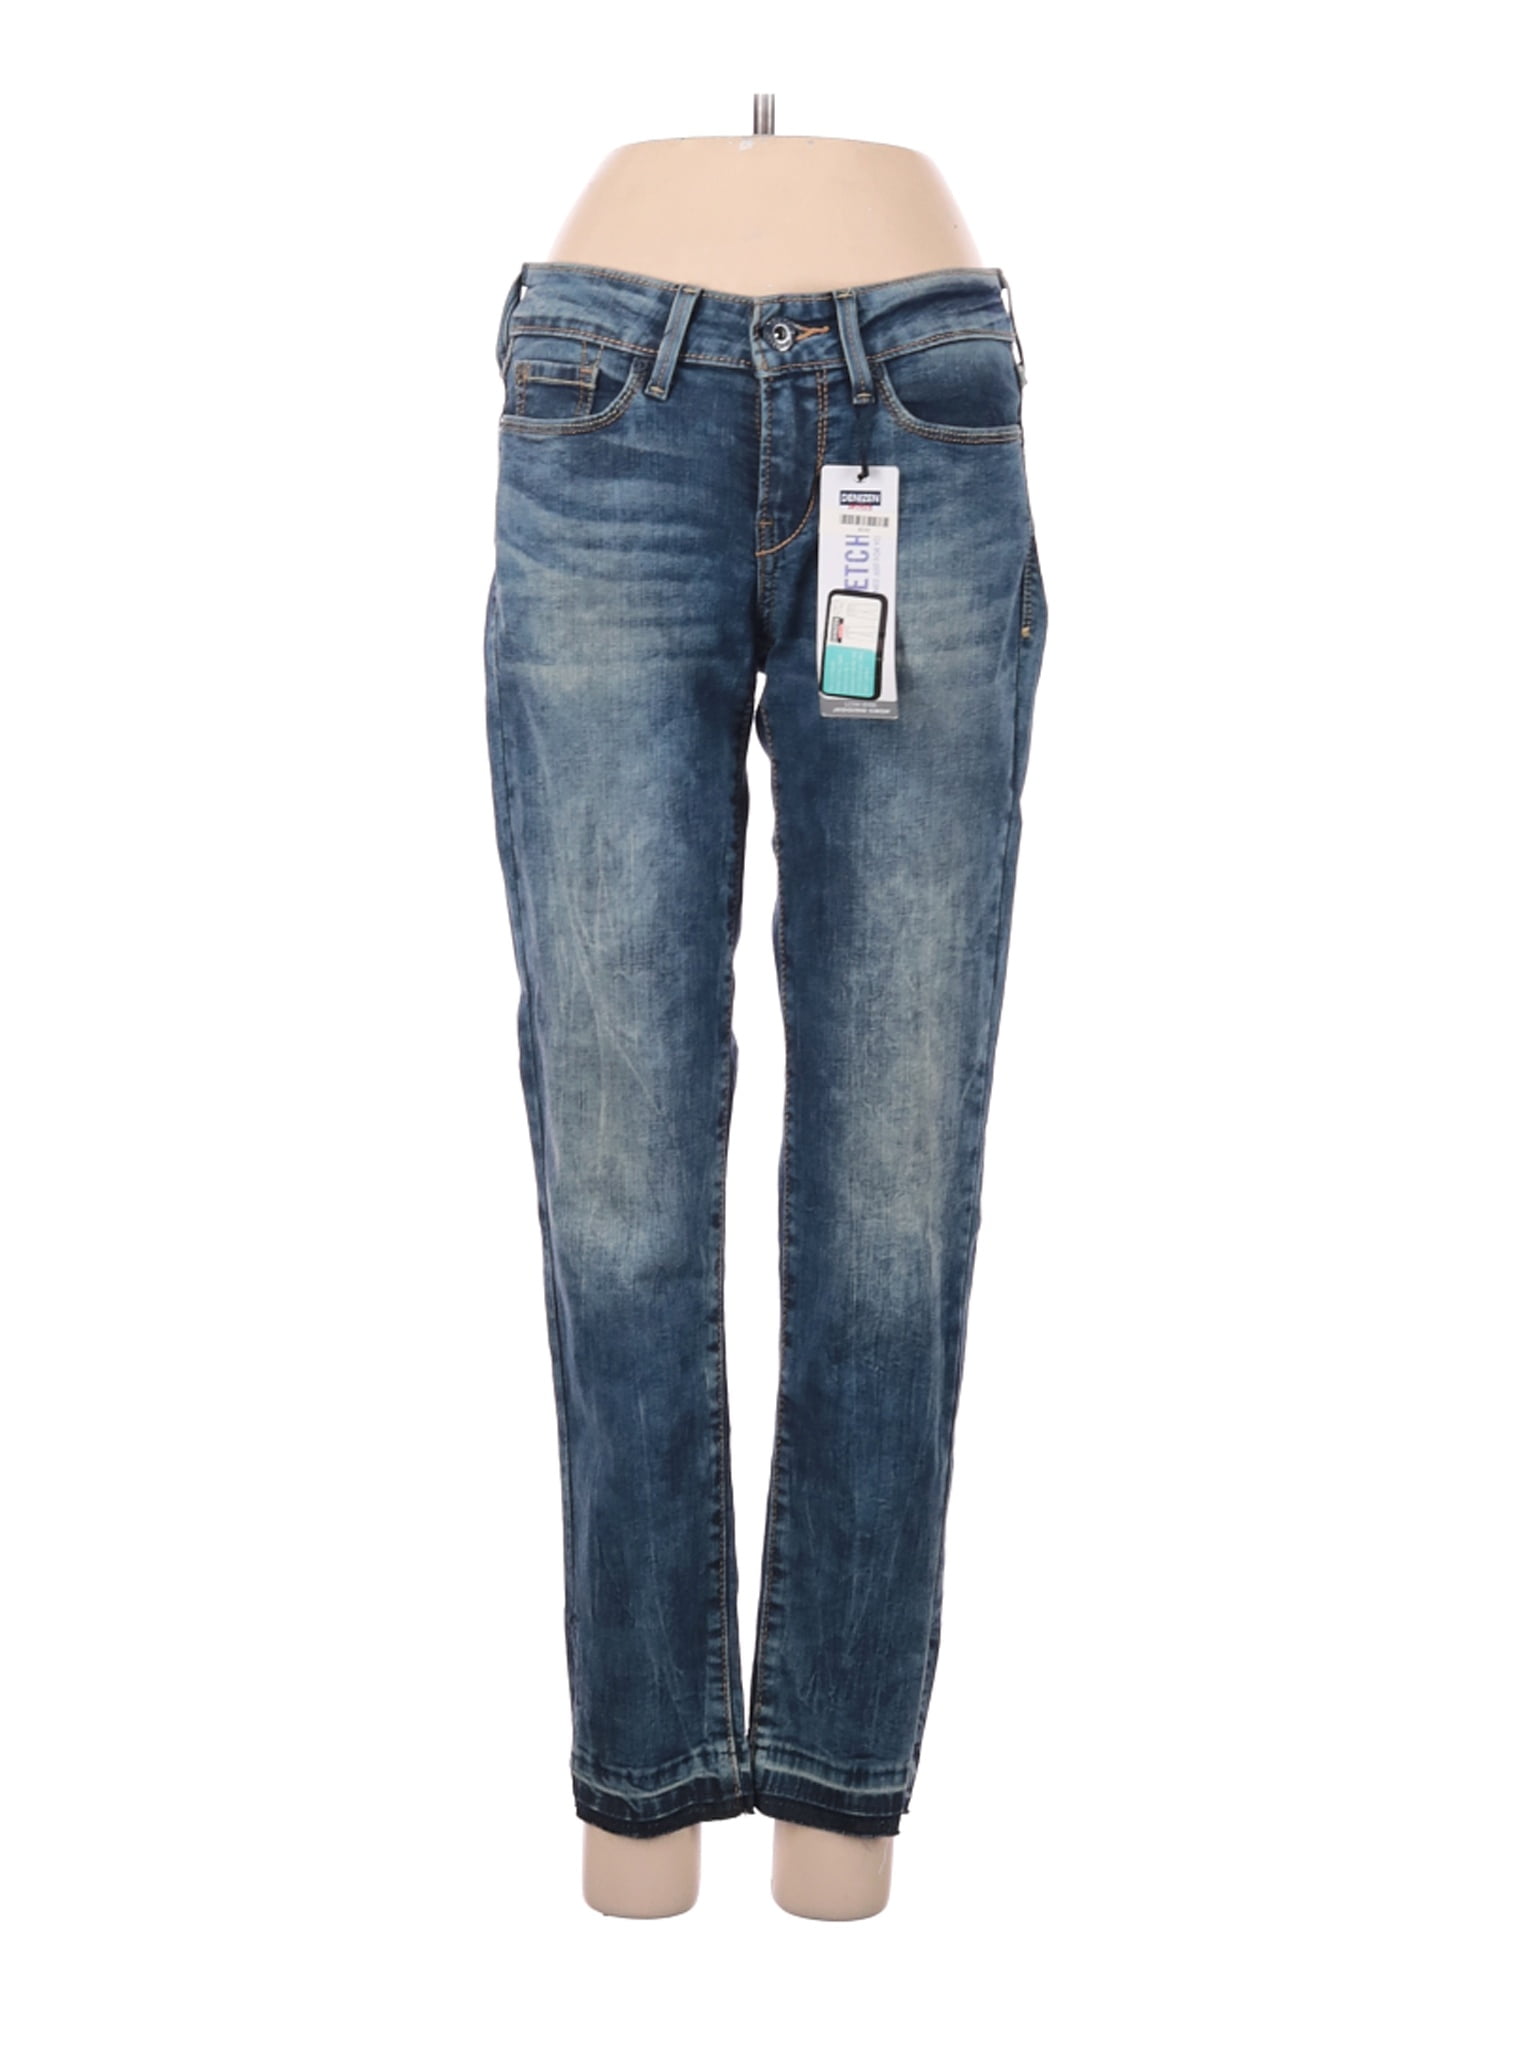 Size 26W Jeans - Walmart 